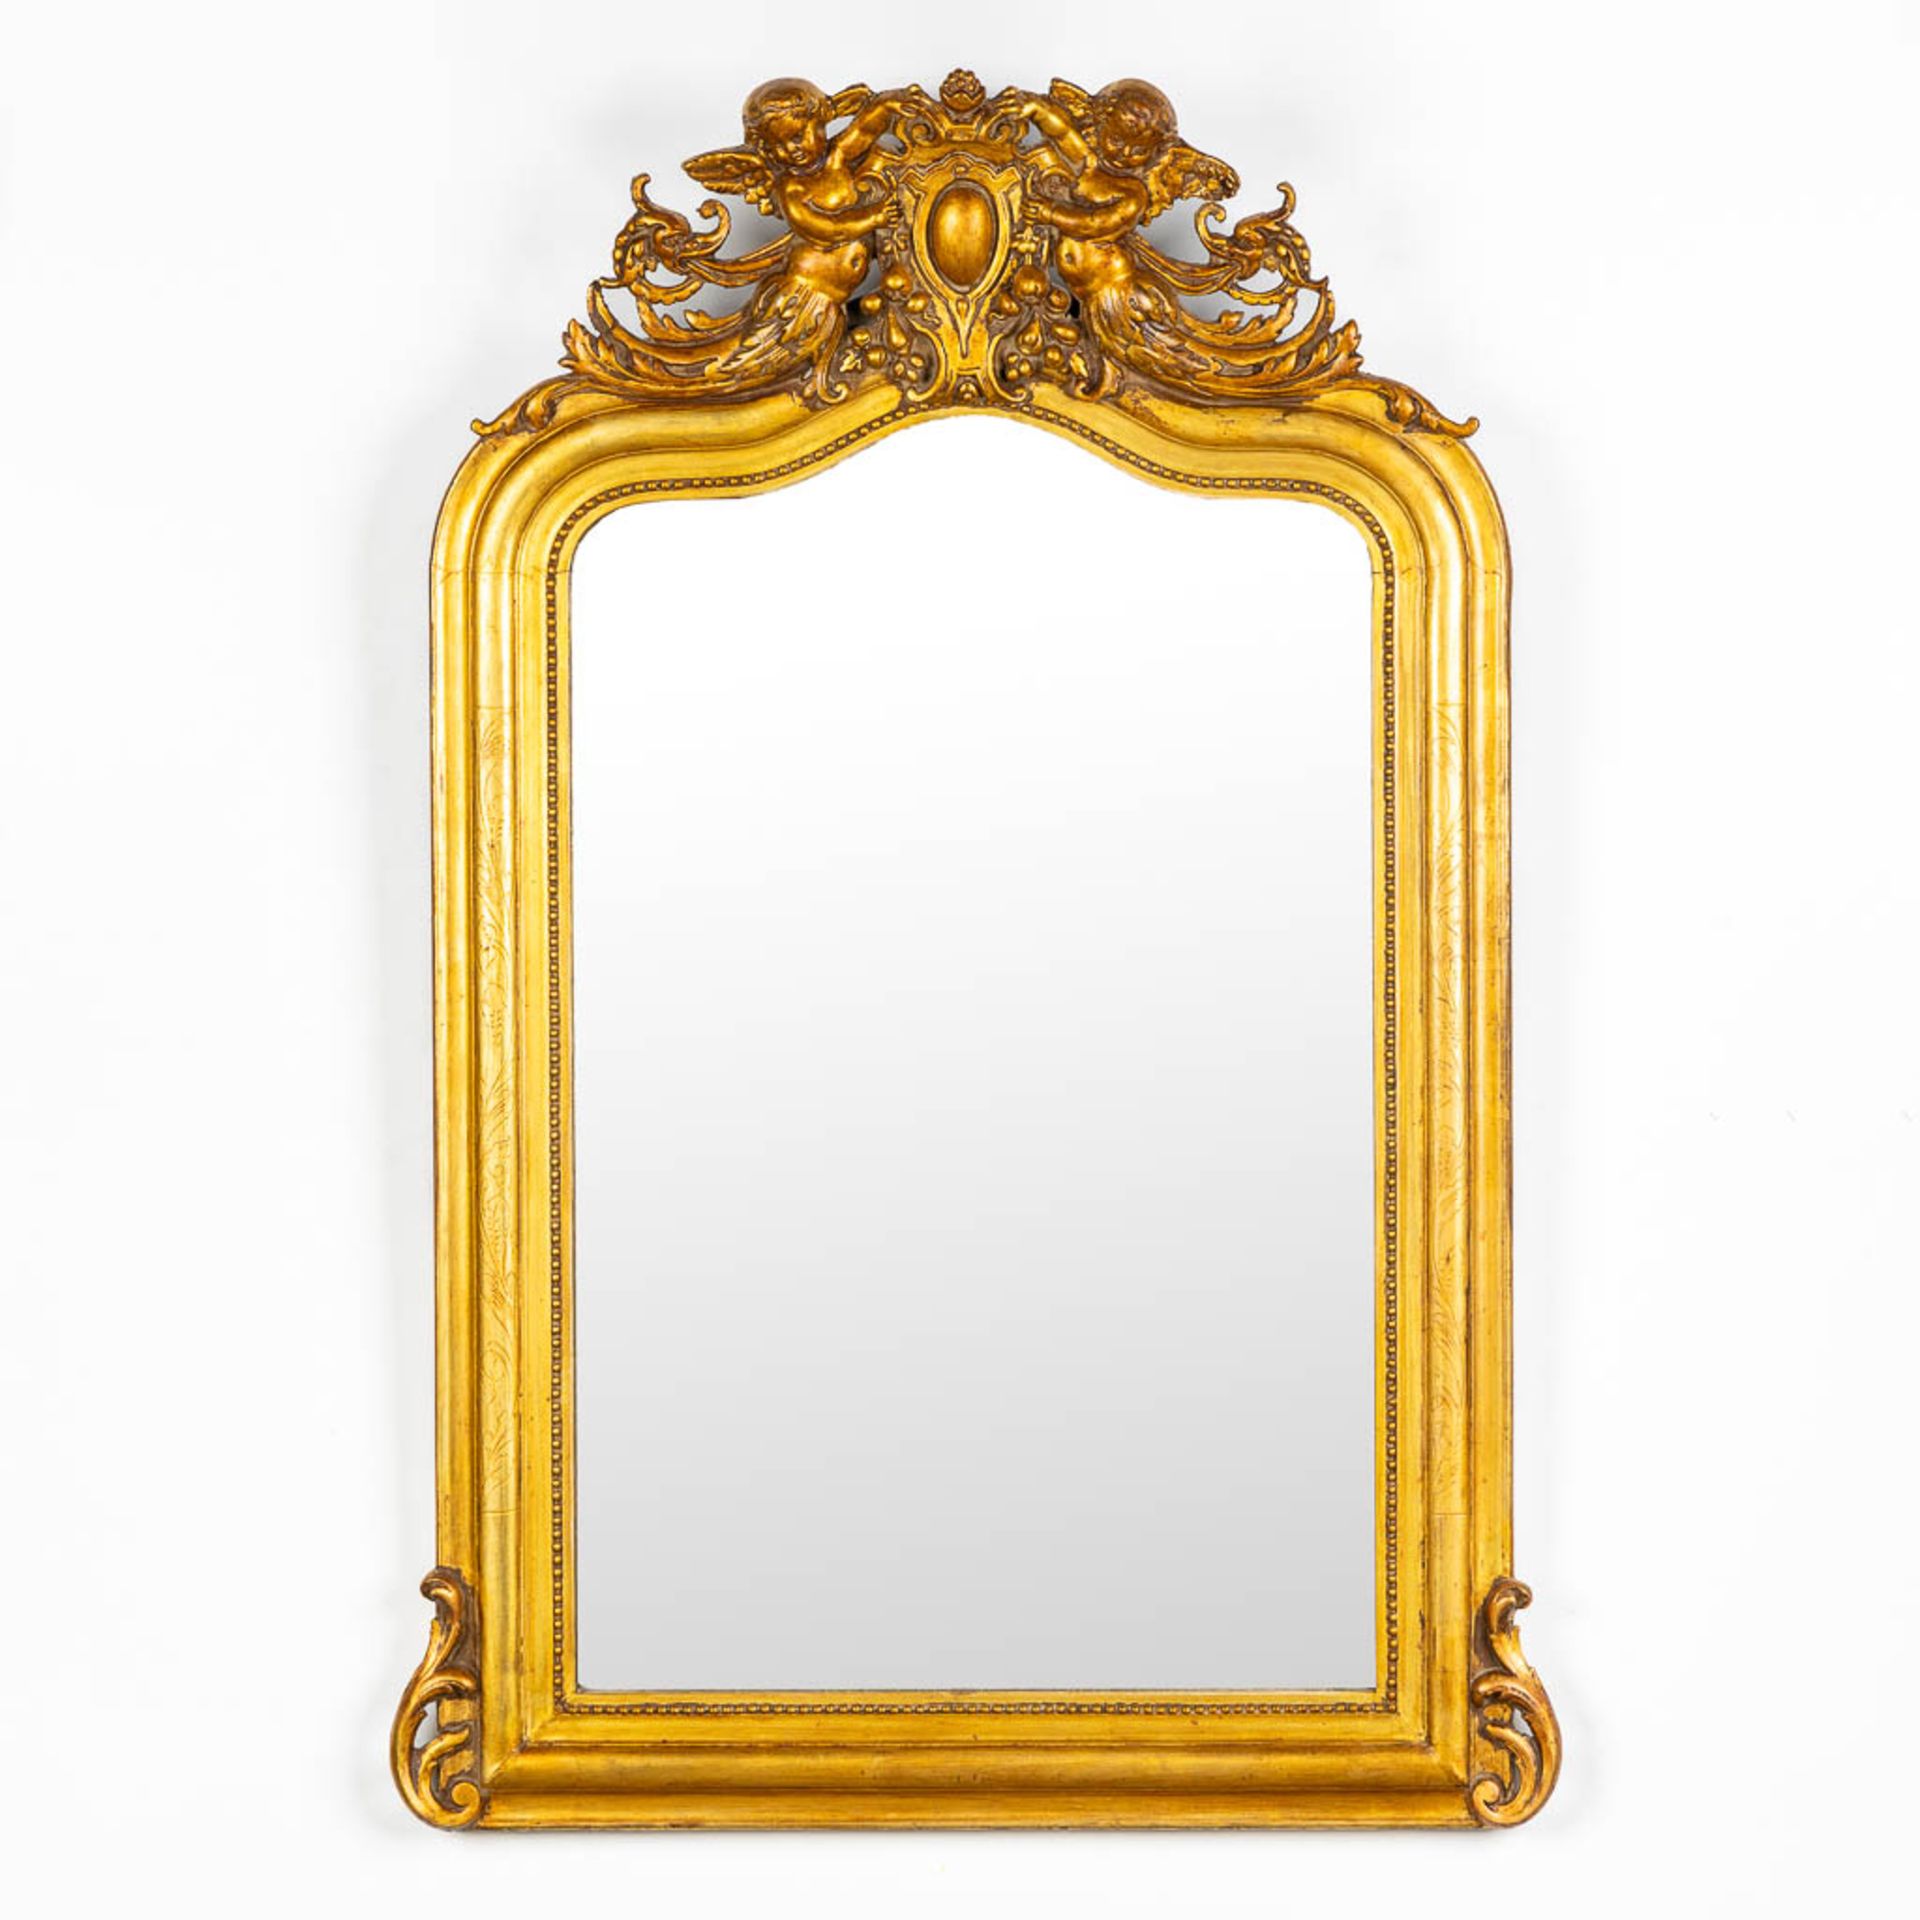 An antique mirror, gilt wood and stucco. Circa 1900. (W:82 x H:122 cm)